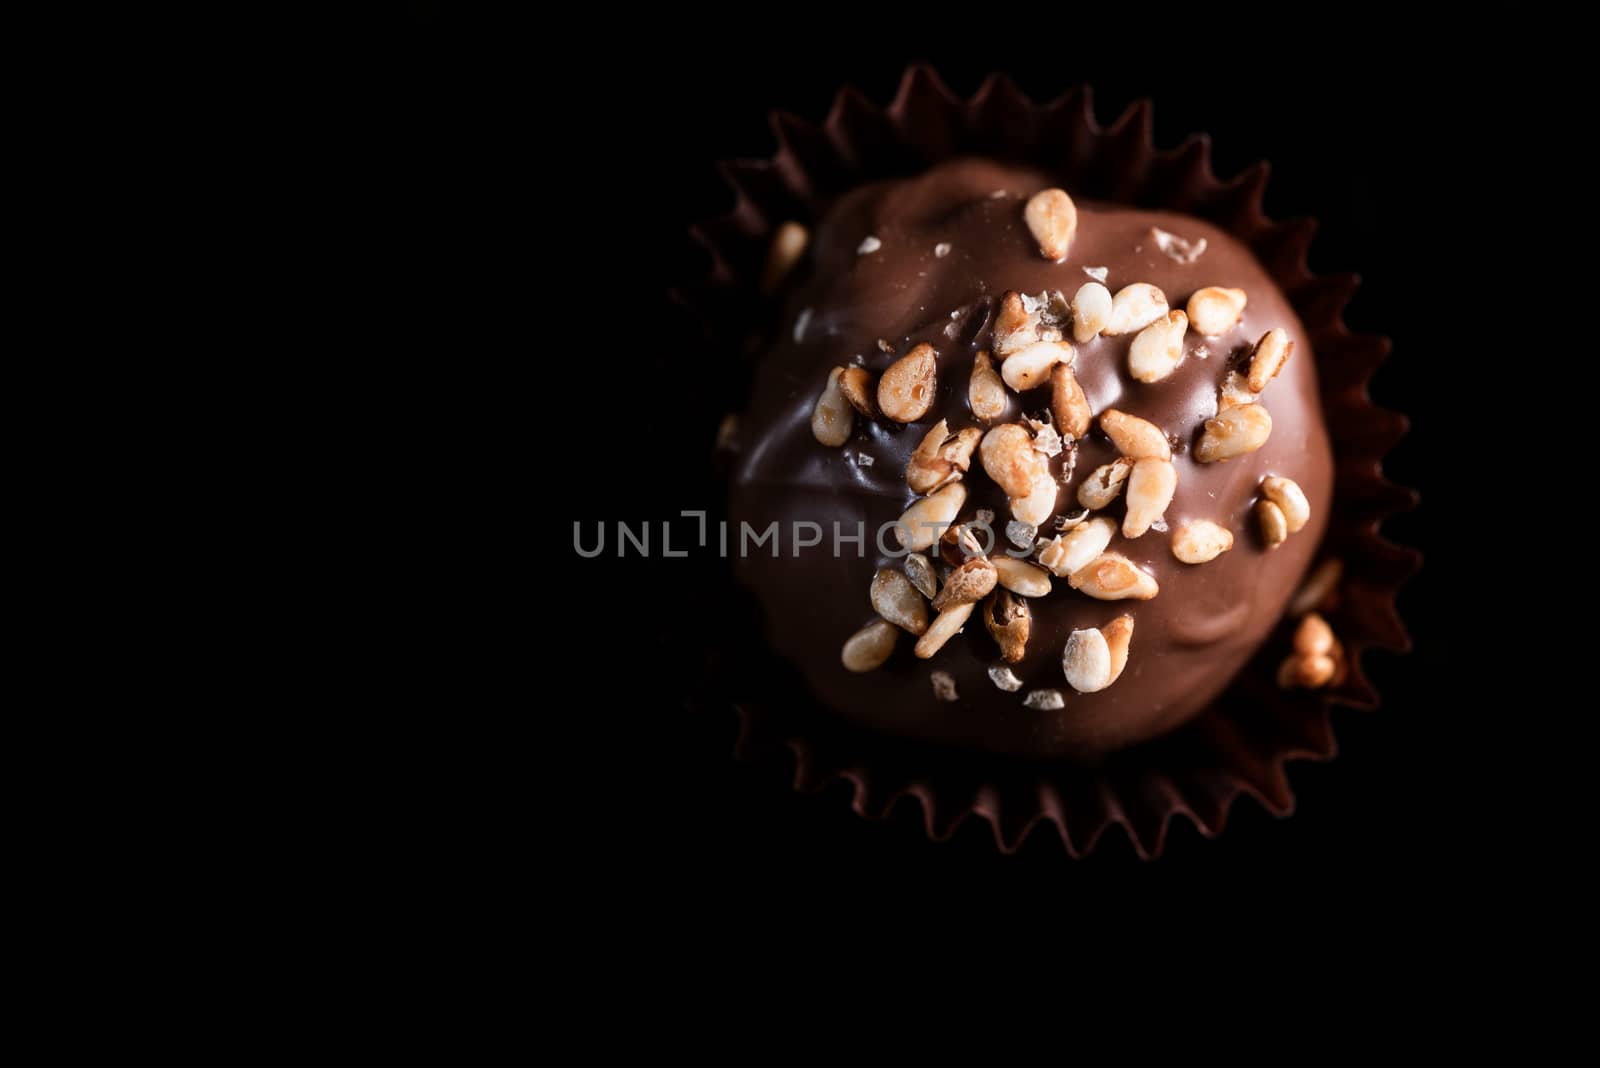 One Single Handmade Chocolate Praline Close Up View. Dark Backgr by merc67